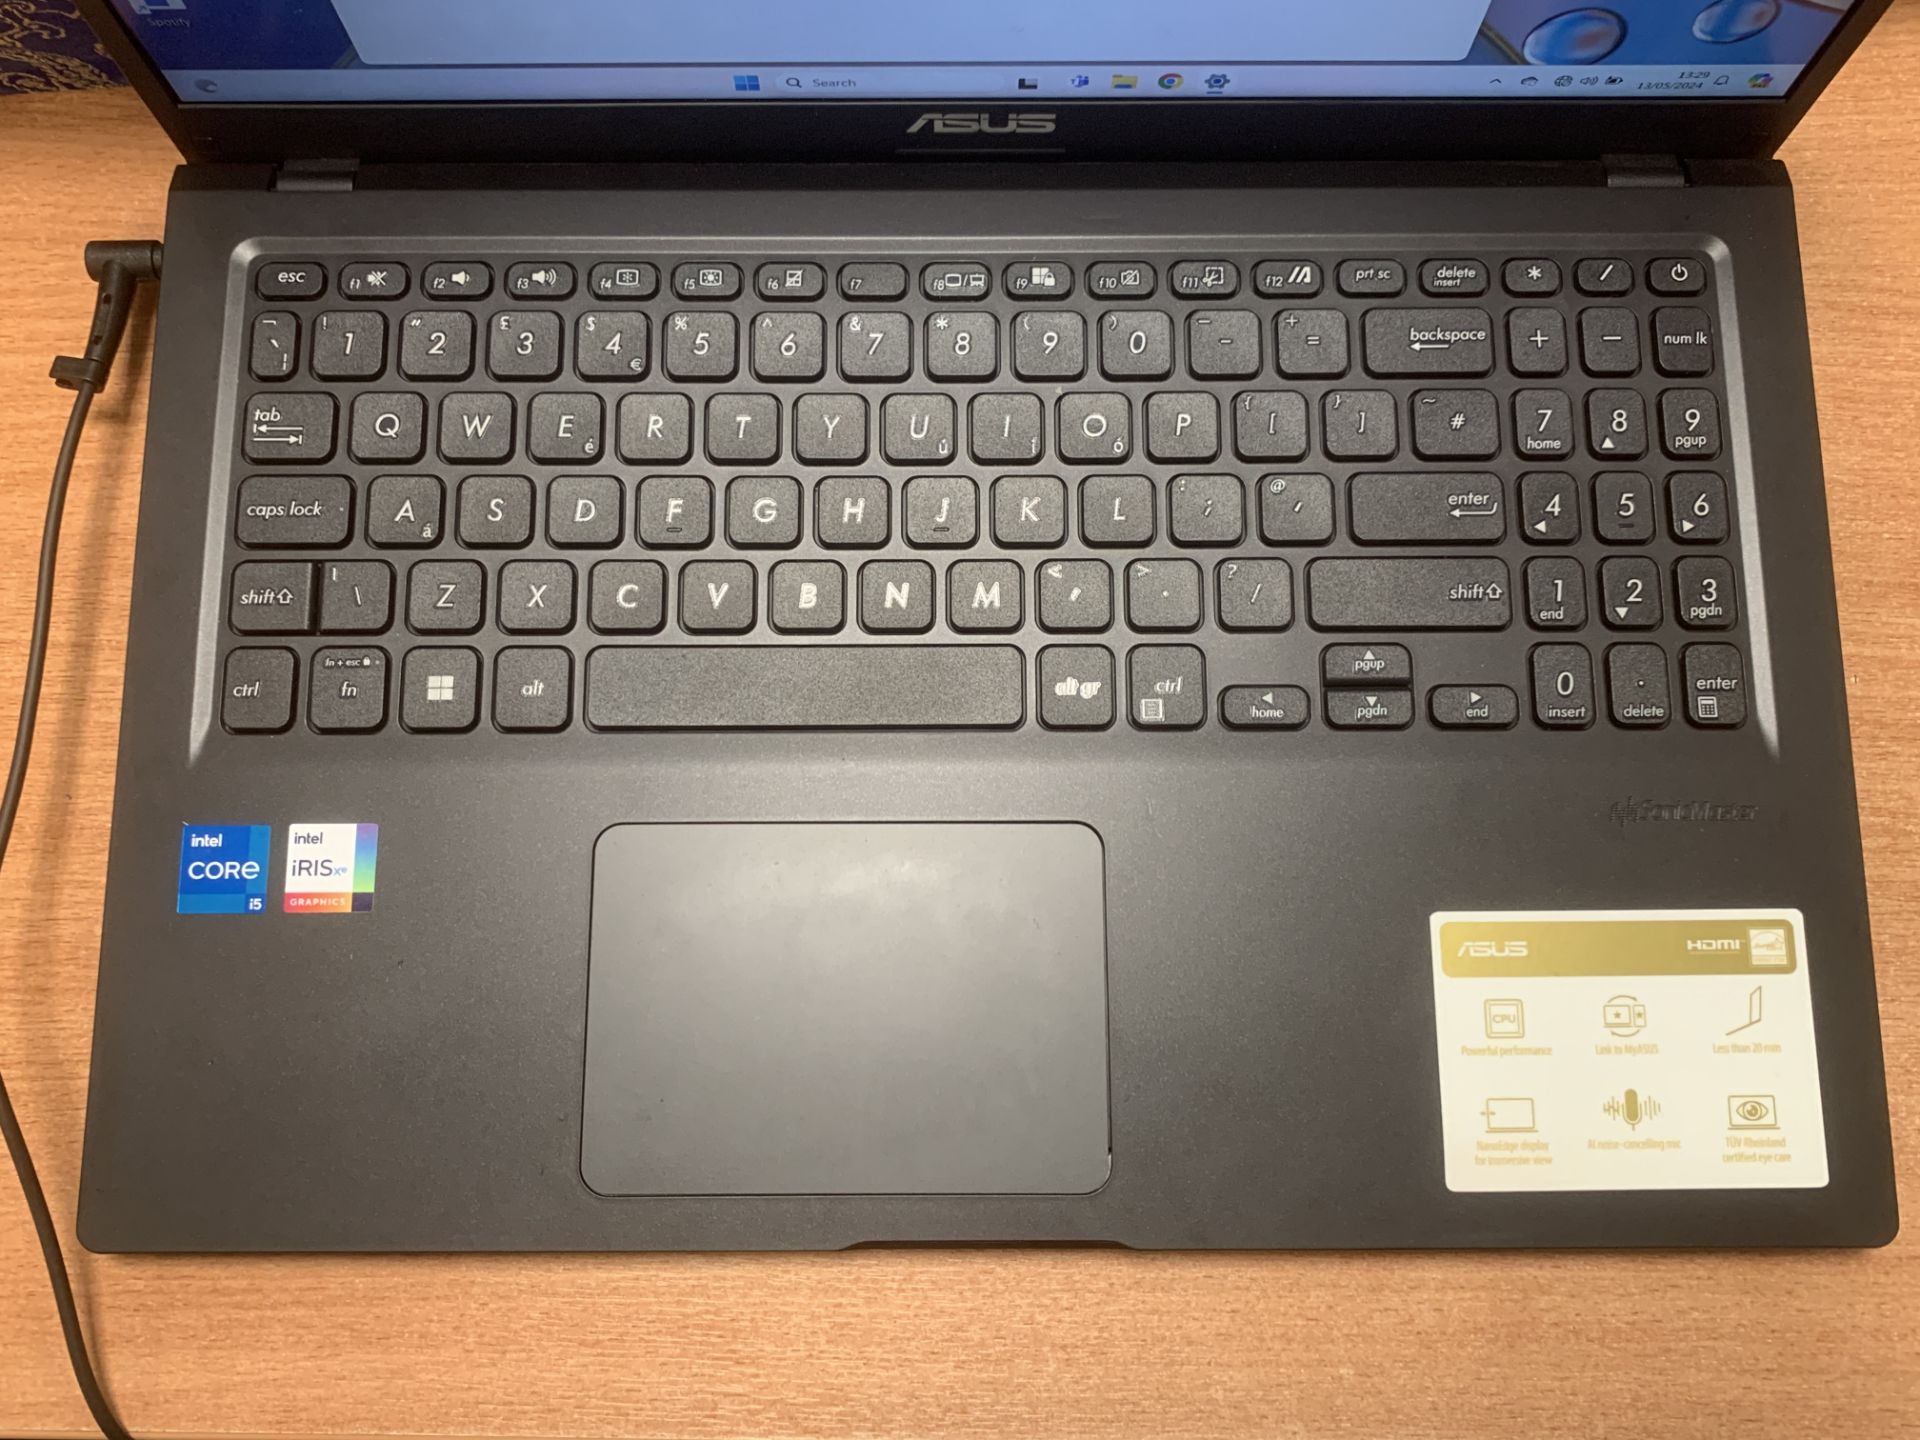 Asus Vivobook Laptop - Image 2 of 4